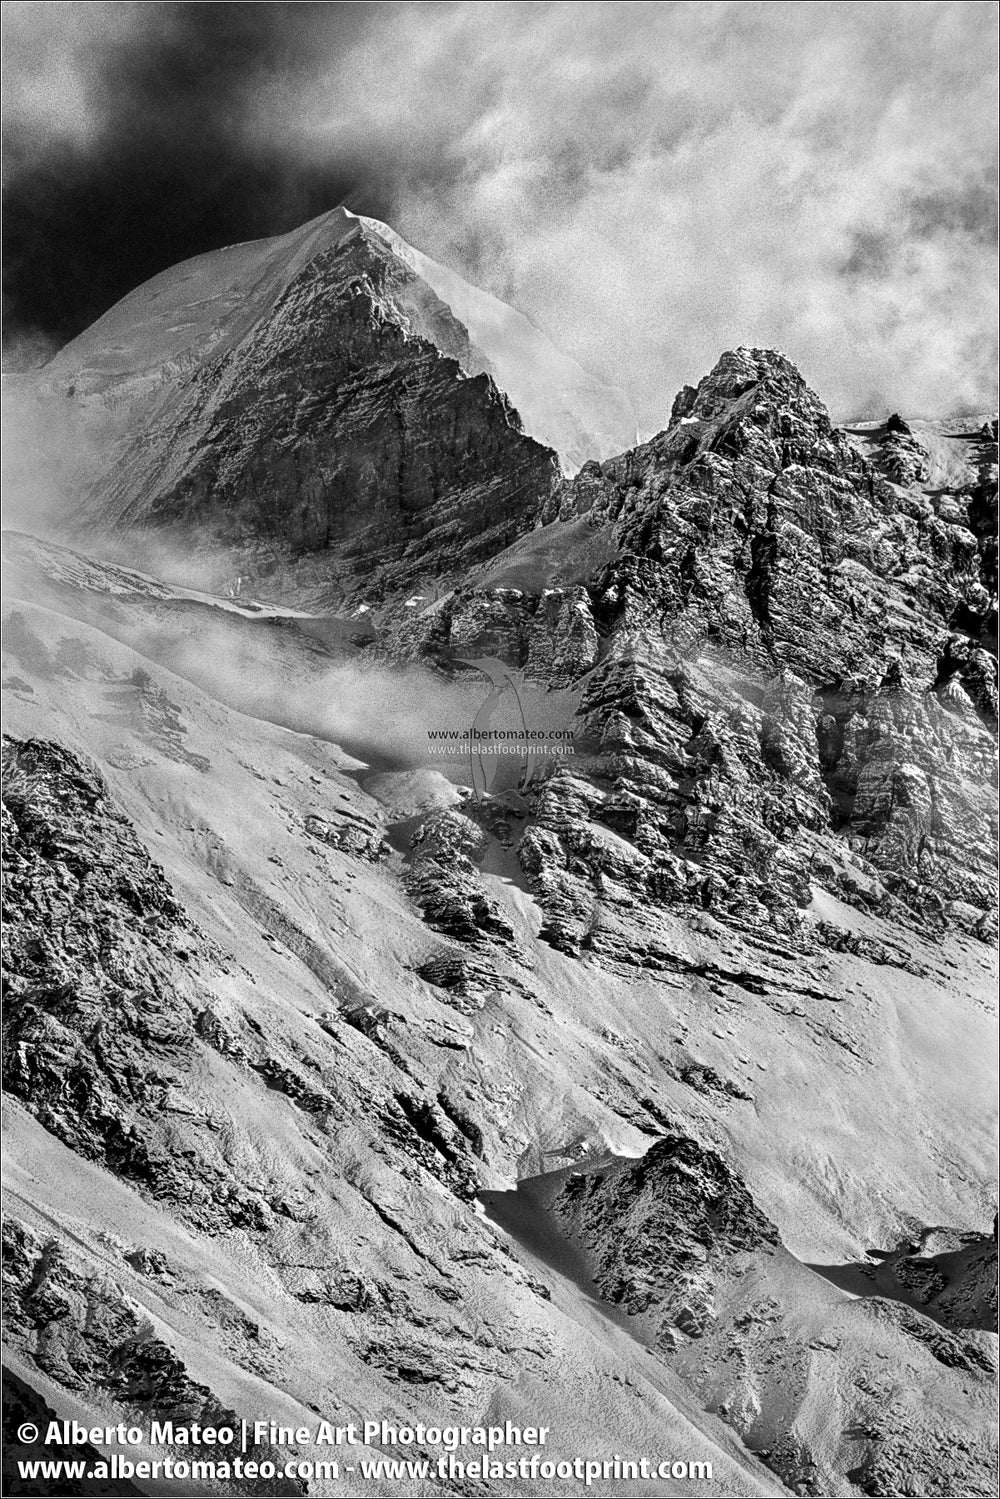 Thorung Peak from Letdar, Vertical, Himalaya, Nepal.